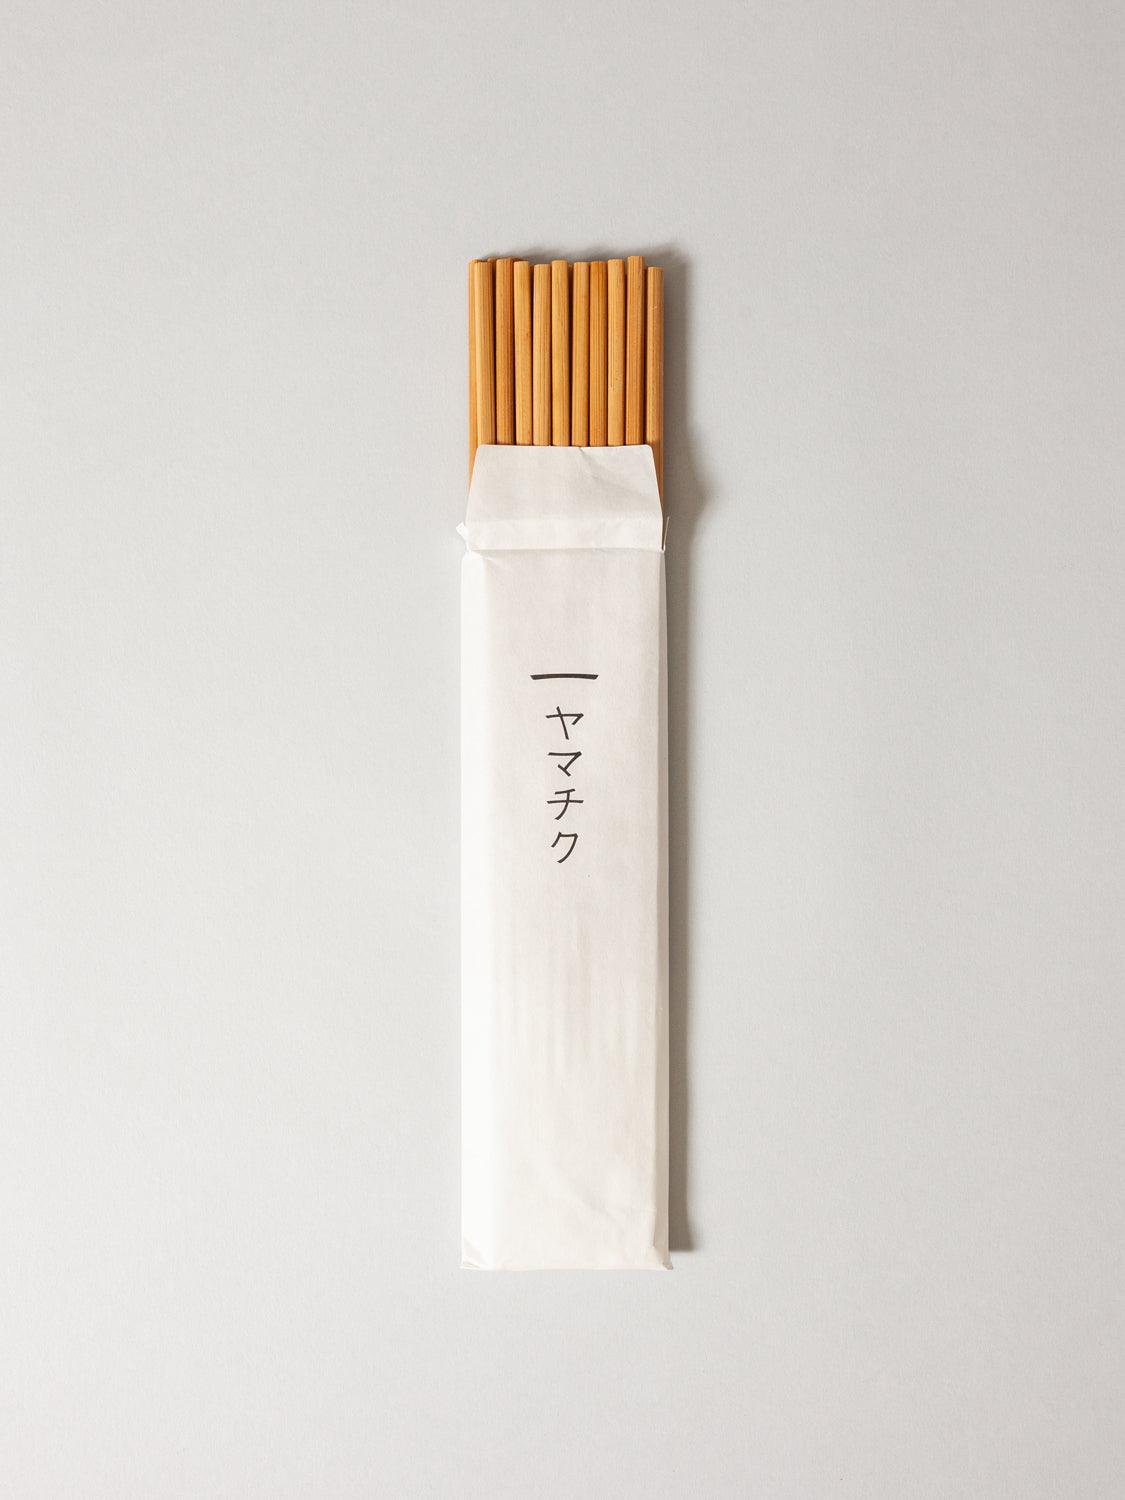 Susu Bamboo Chopstick Set - Natural, Pack of 10 - Rikumo